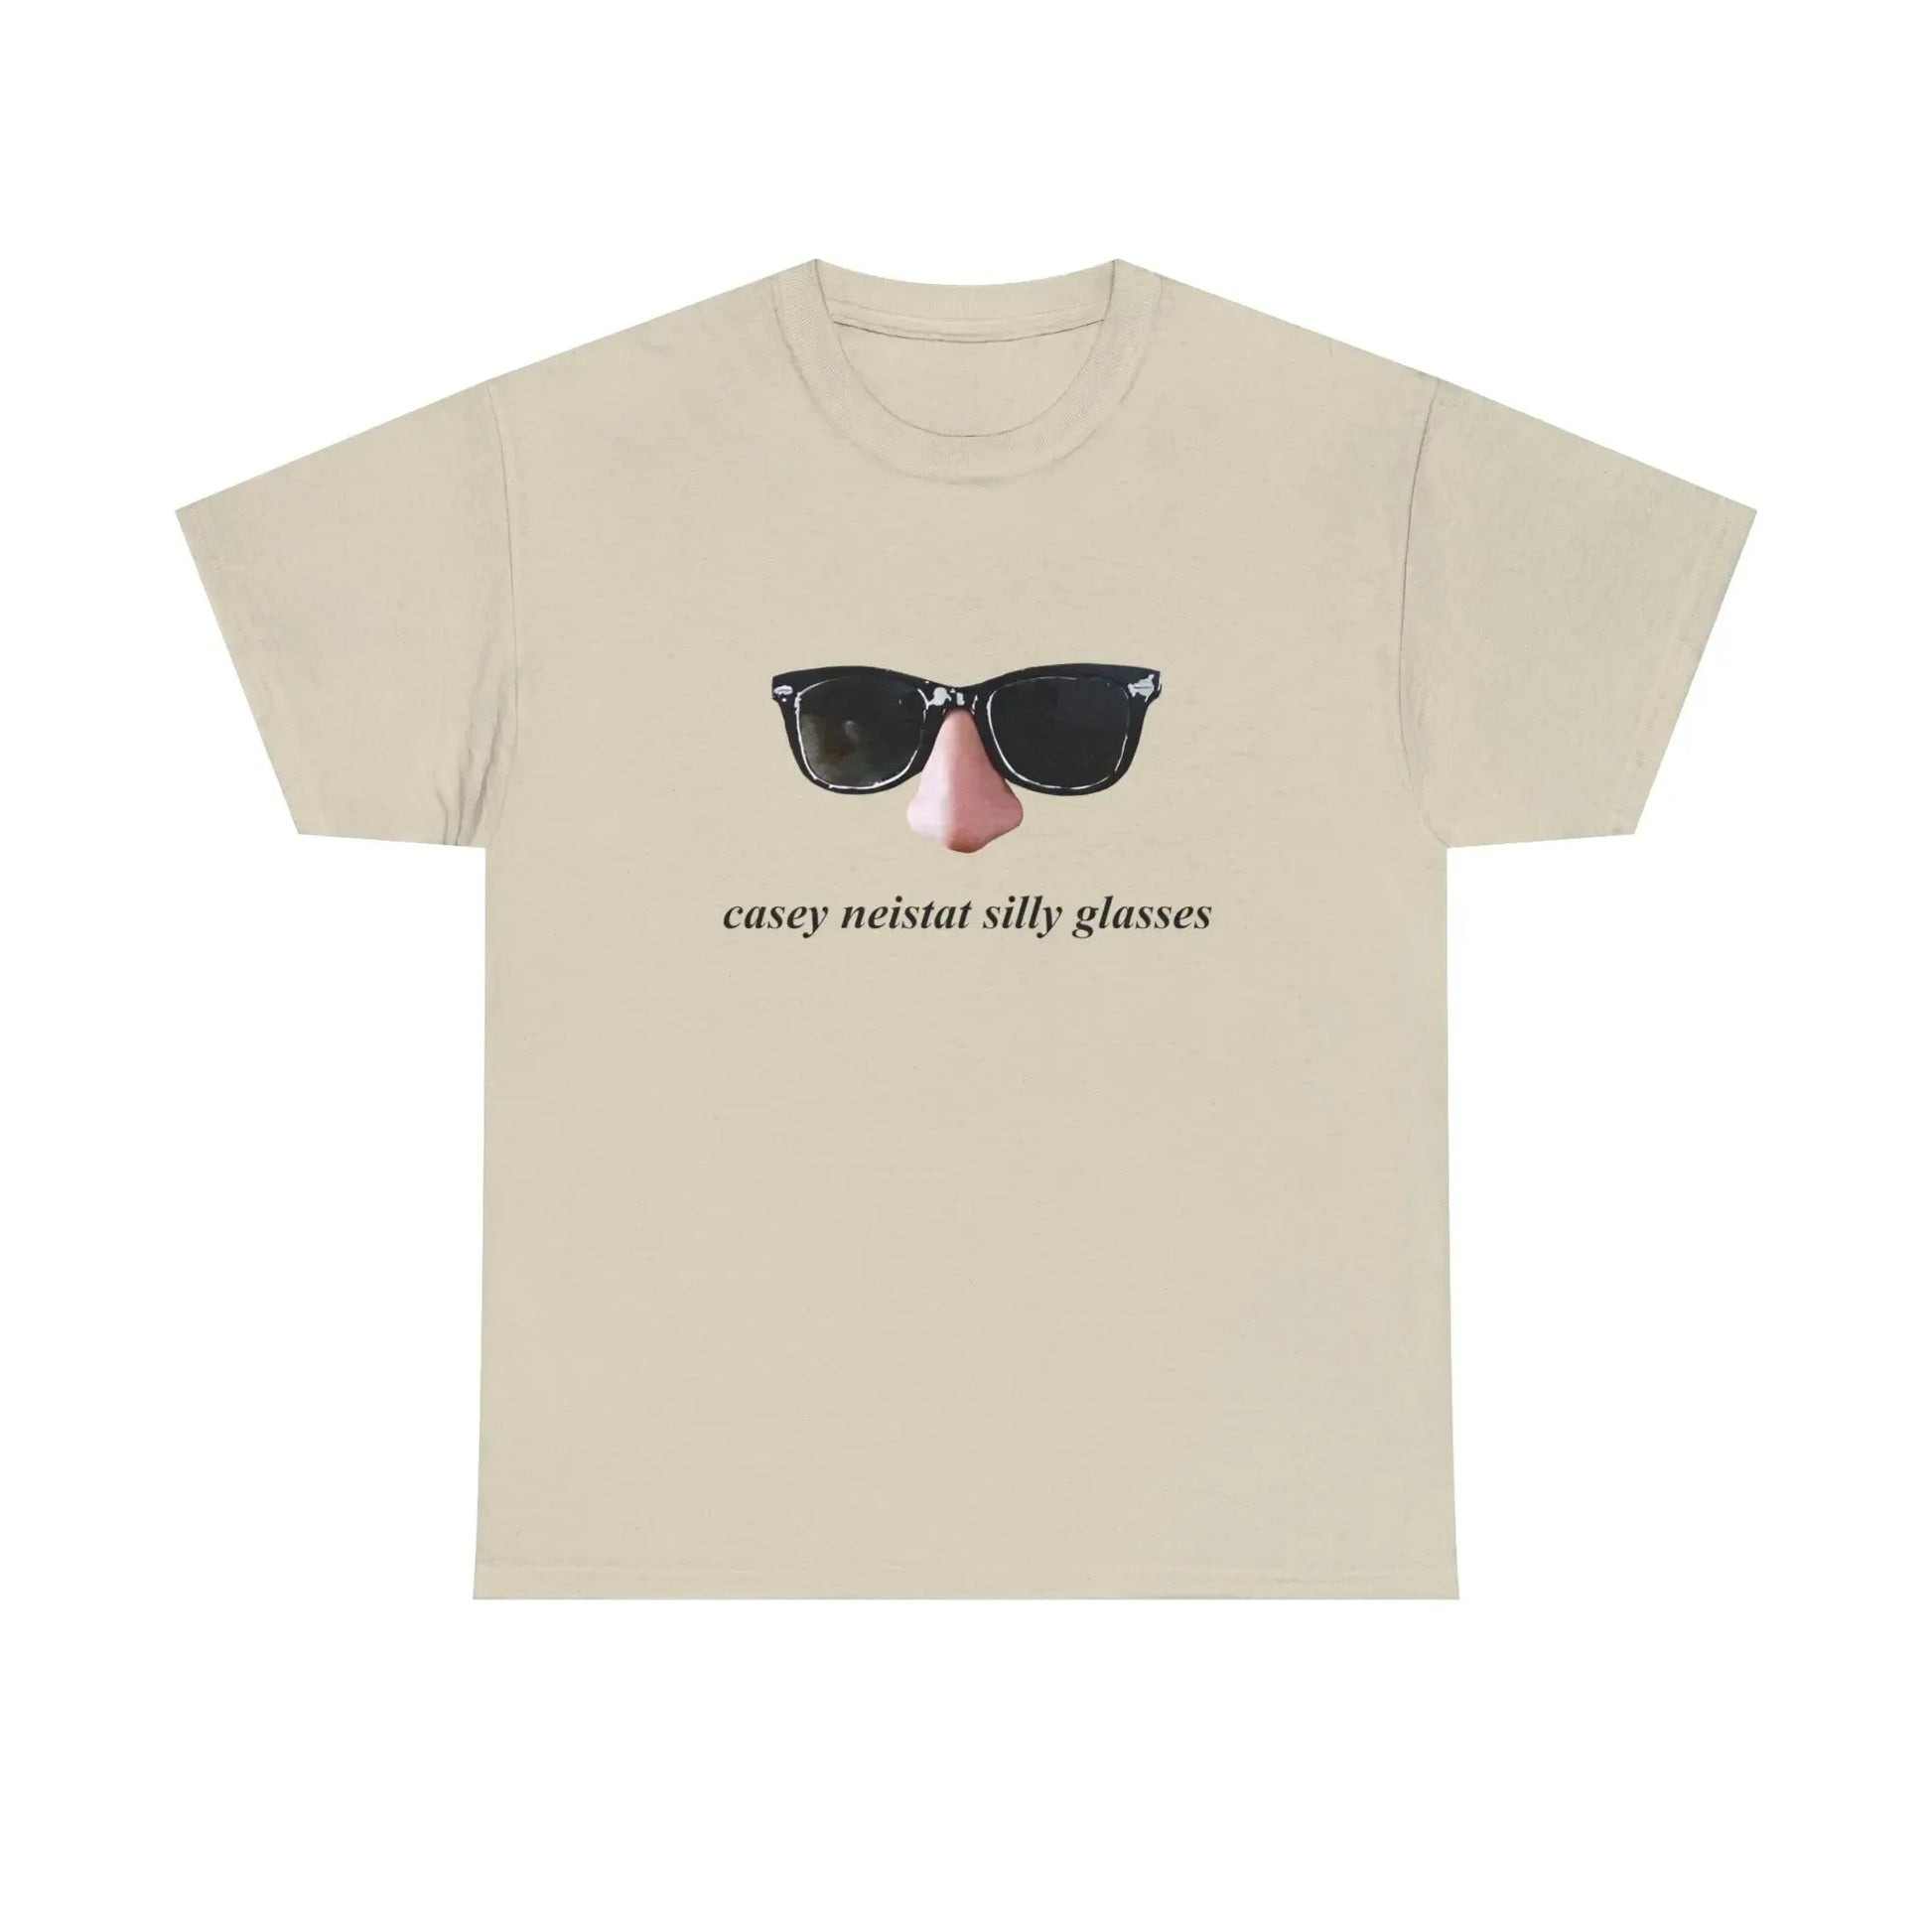 Casey Neistat Silly Glasses T-Shirt - Failure International failureinternational.com store brand tiktok instagram